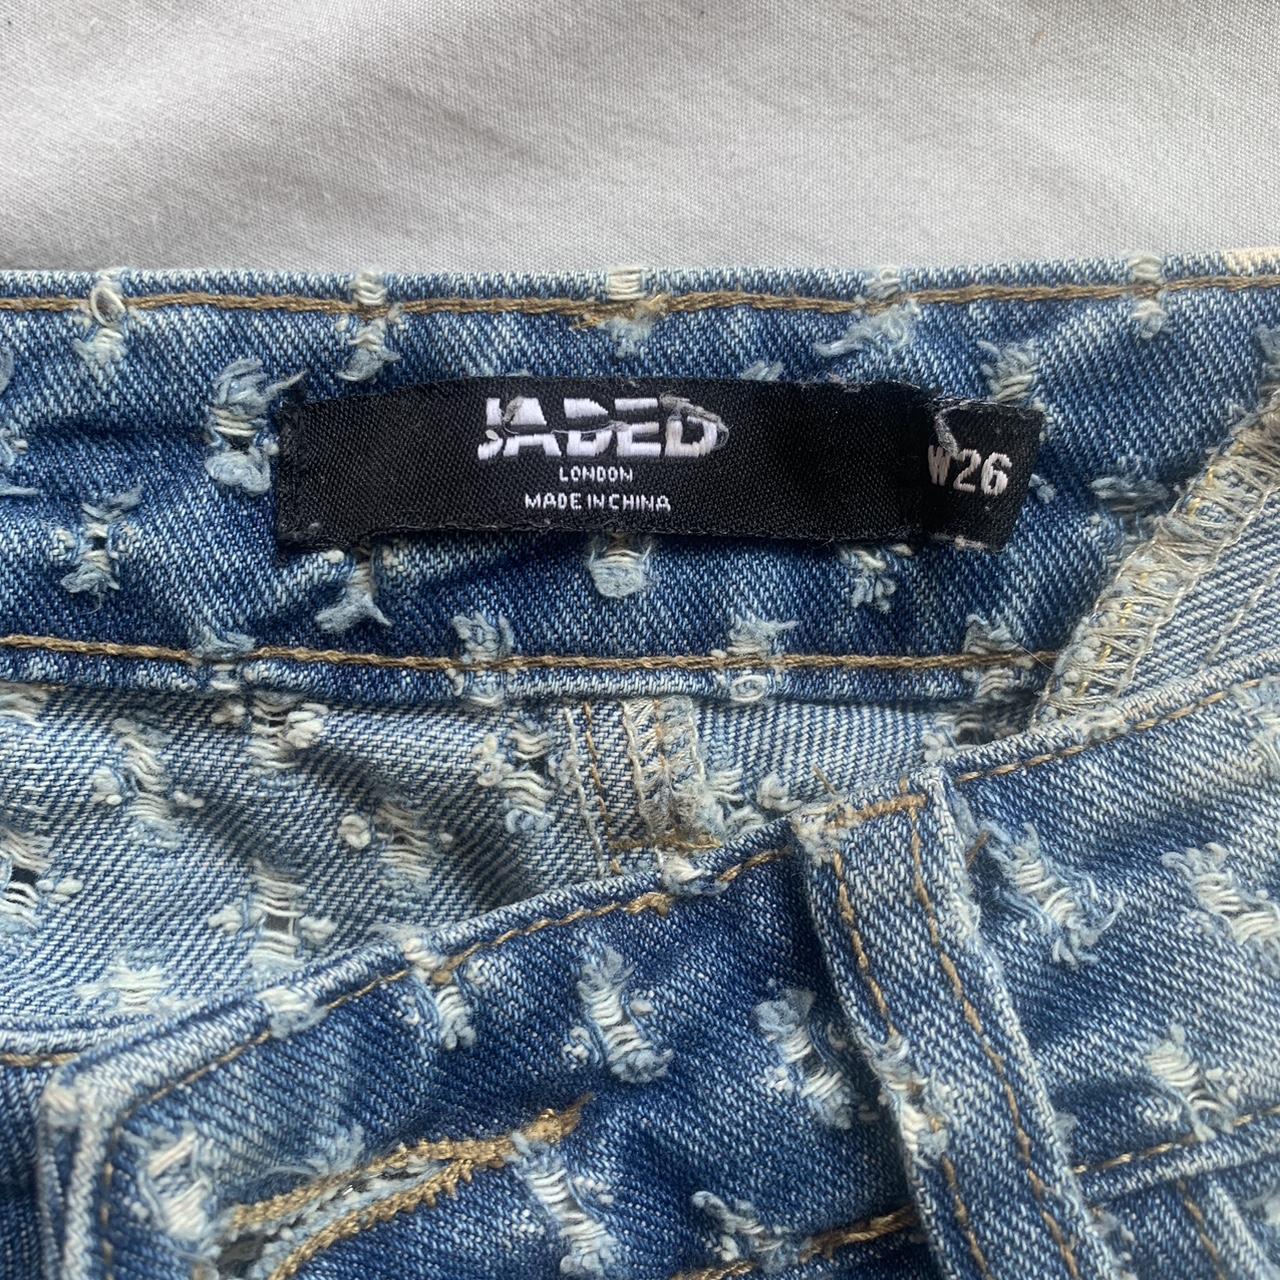 Jaded London distressed jeans - Depop